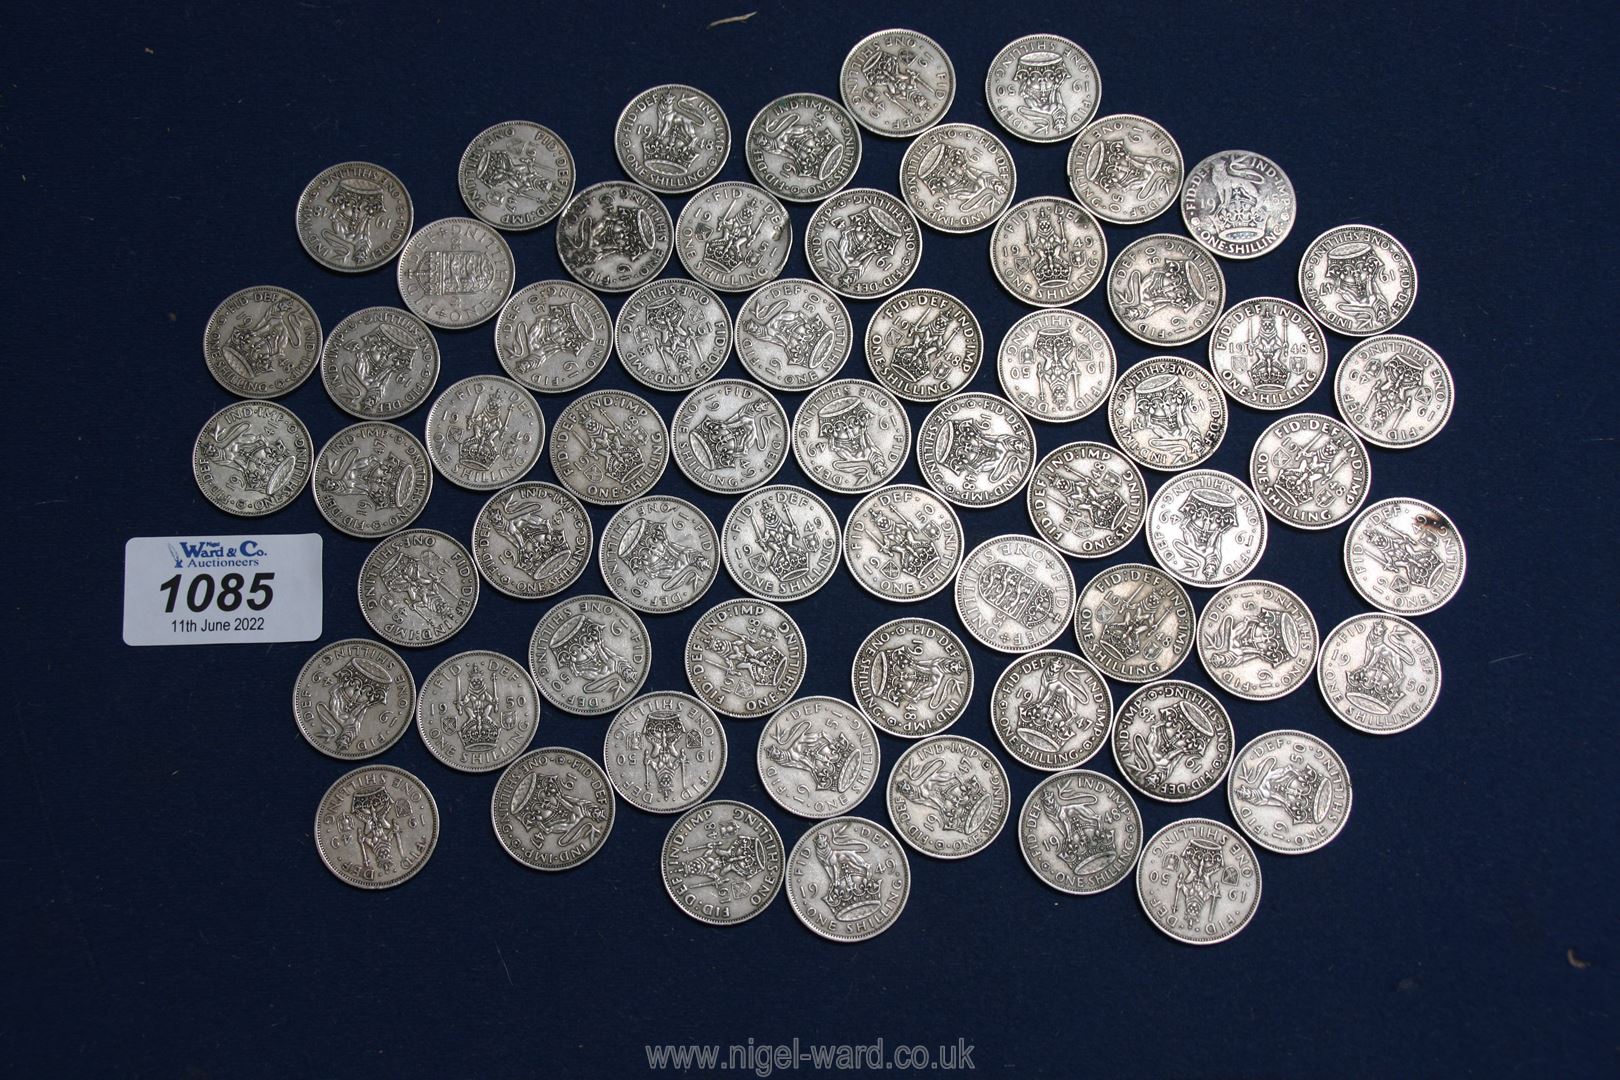 A good quantity of George VI shillings.